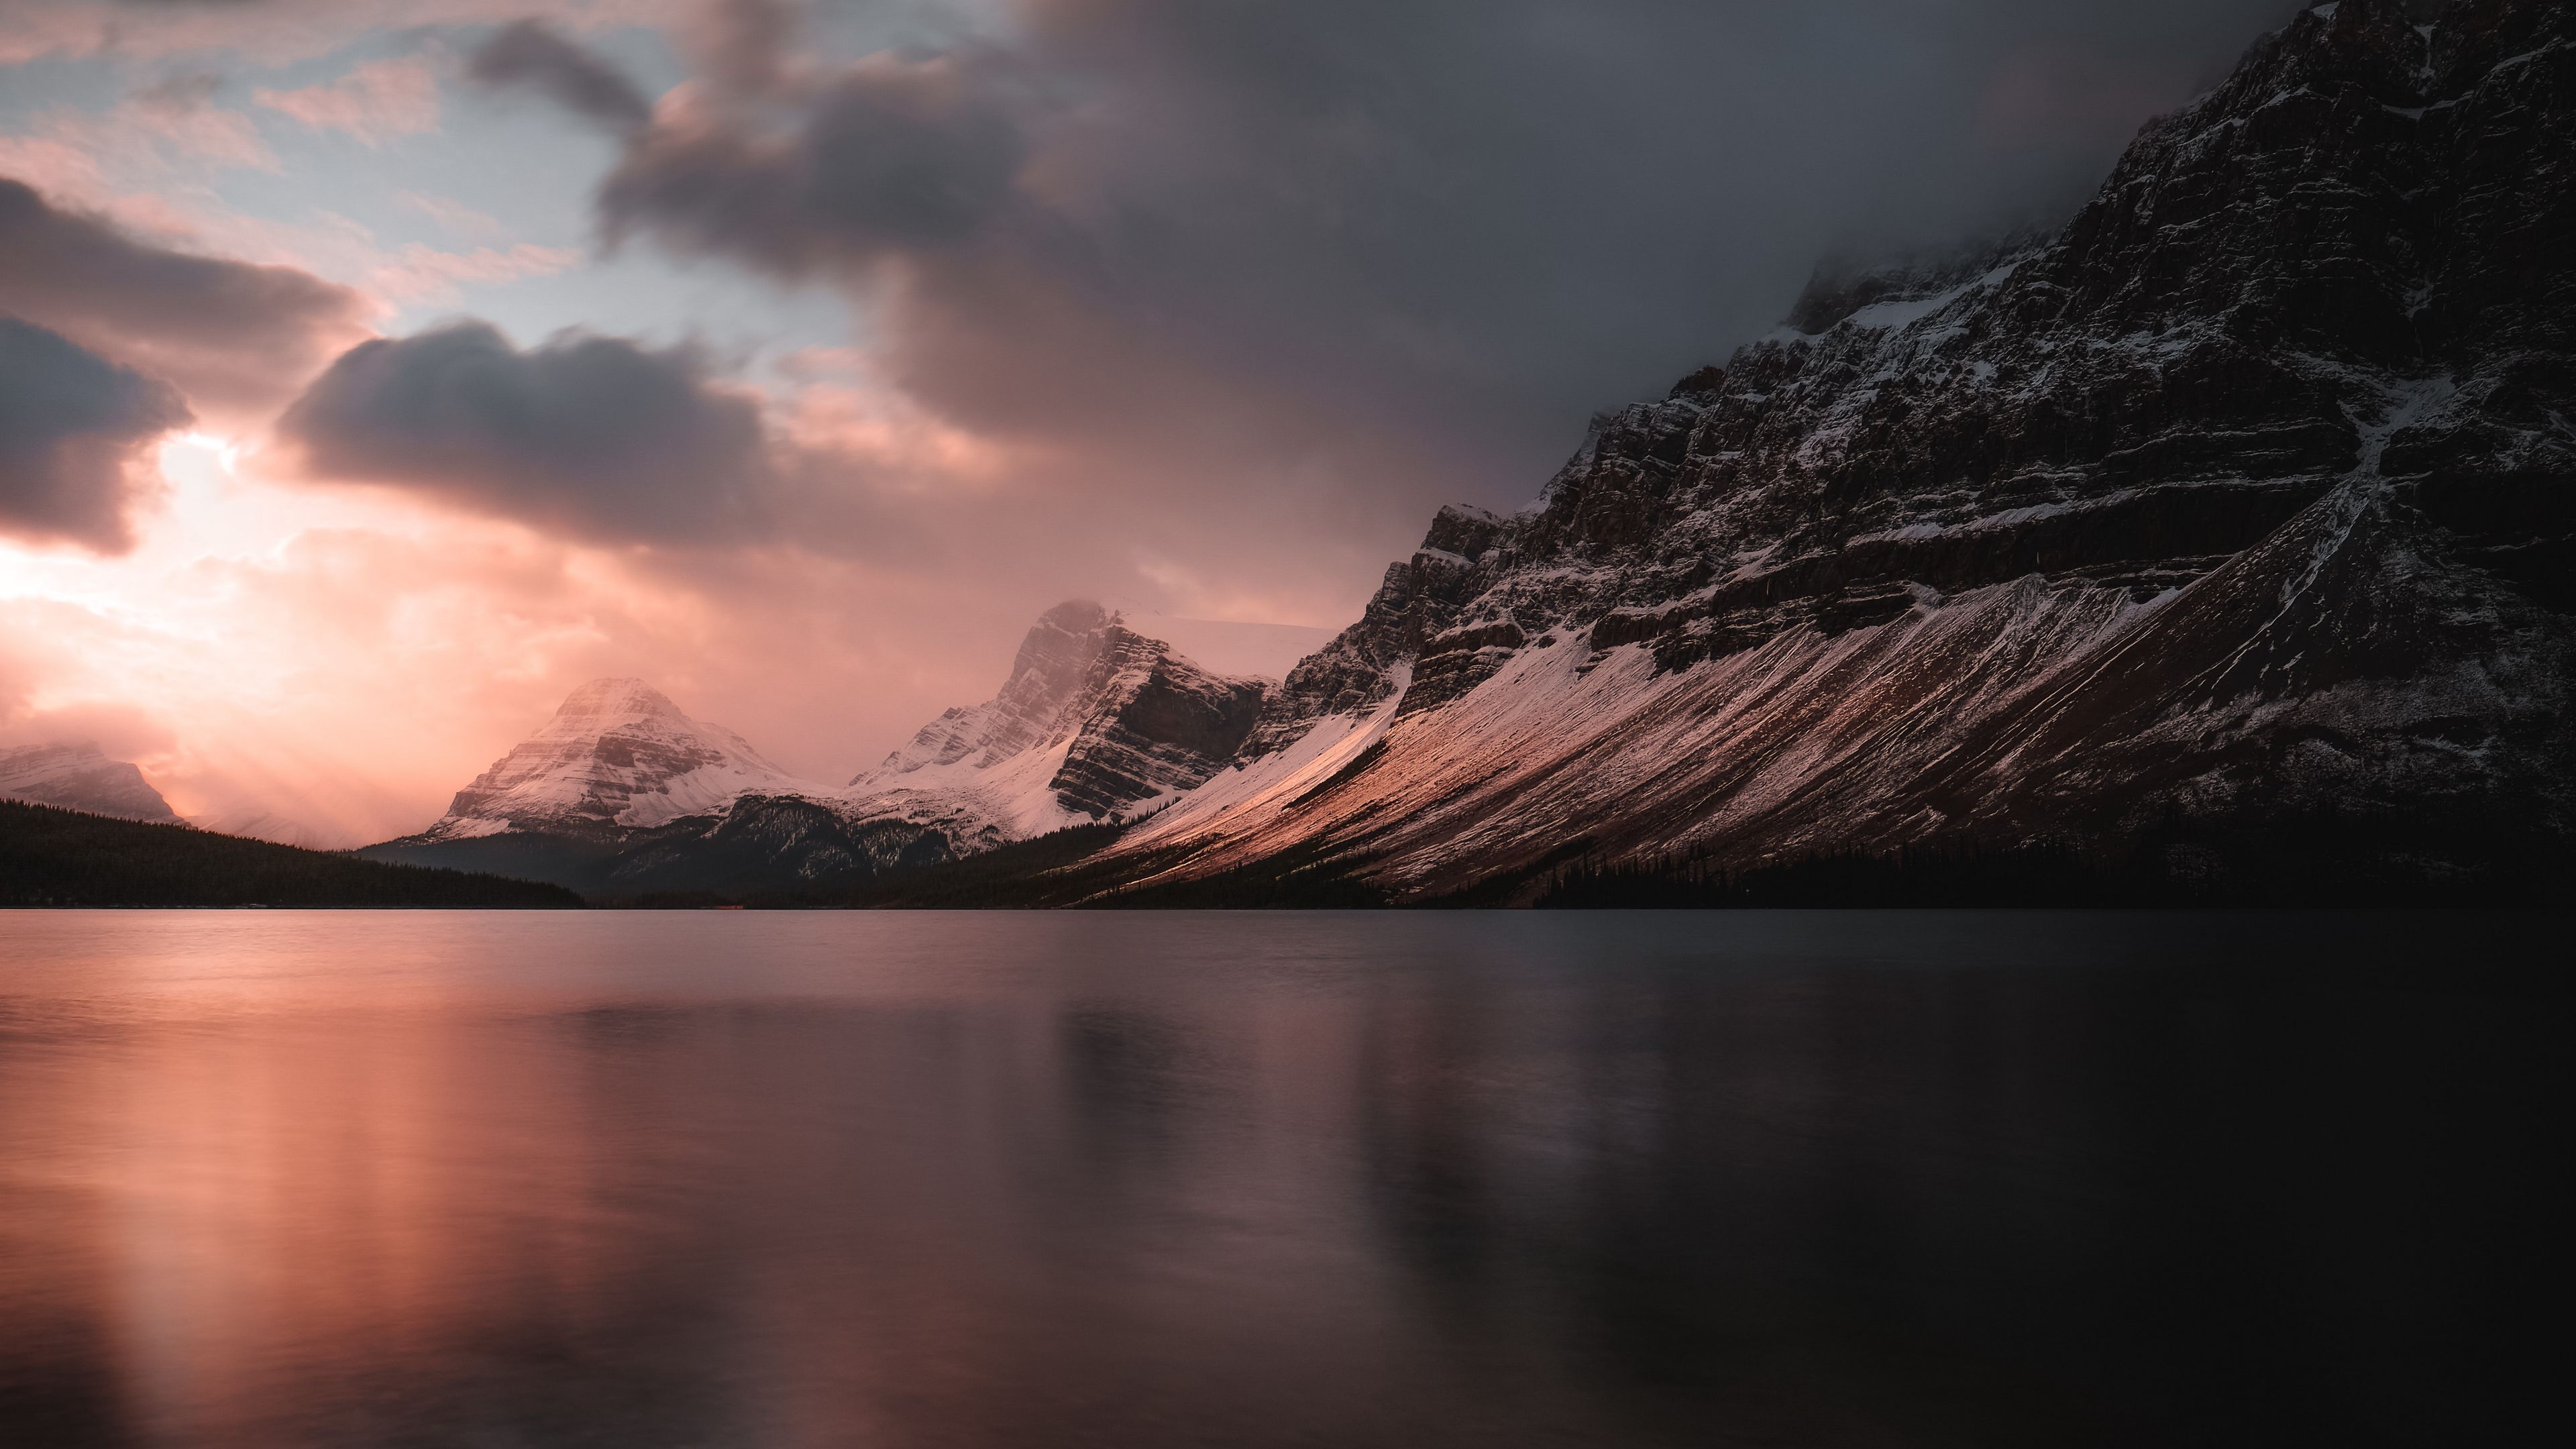 Download wallpaper 3840x2160 lake, mountains, sunset, dusk, landscape 4k uhd 16:9 HD background